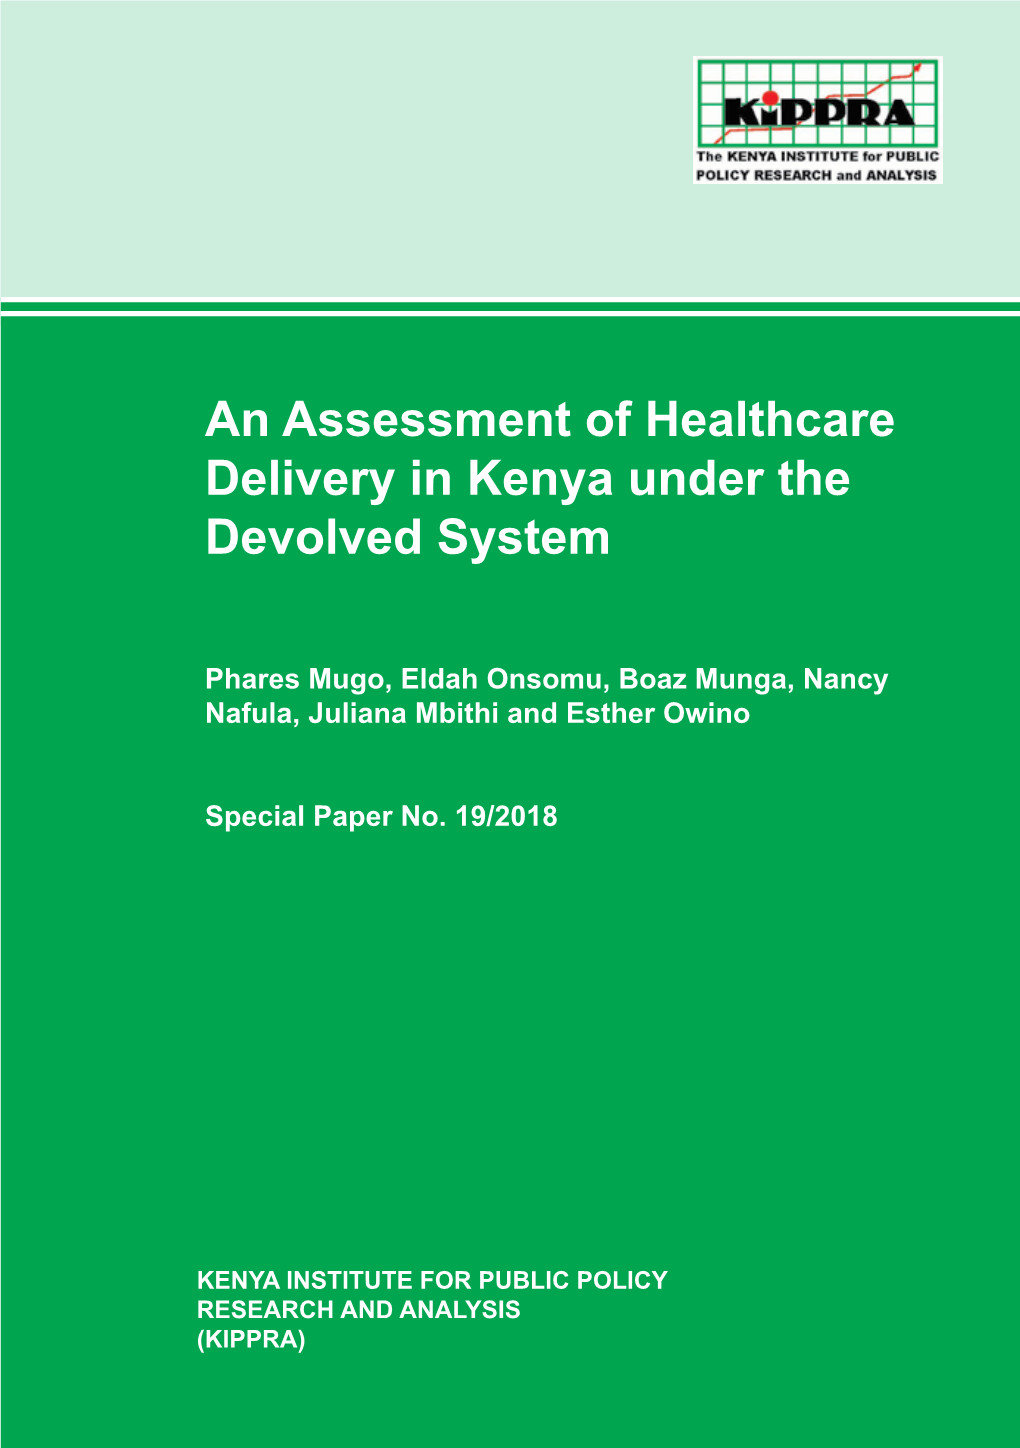 An Assessment of Healthcare Delivery in Kenya Under the Devolved System